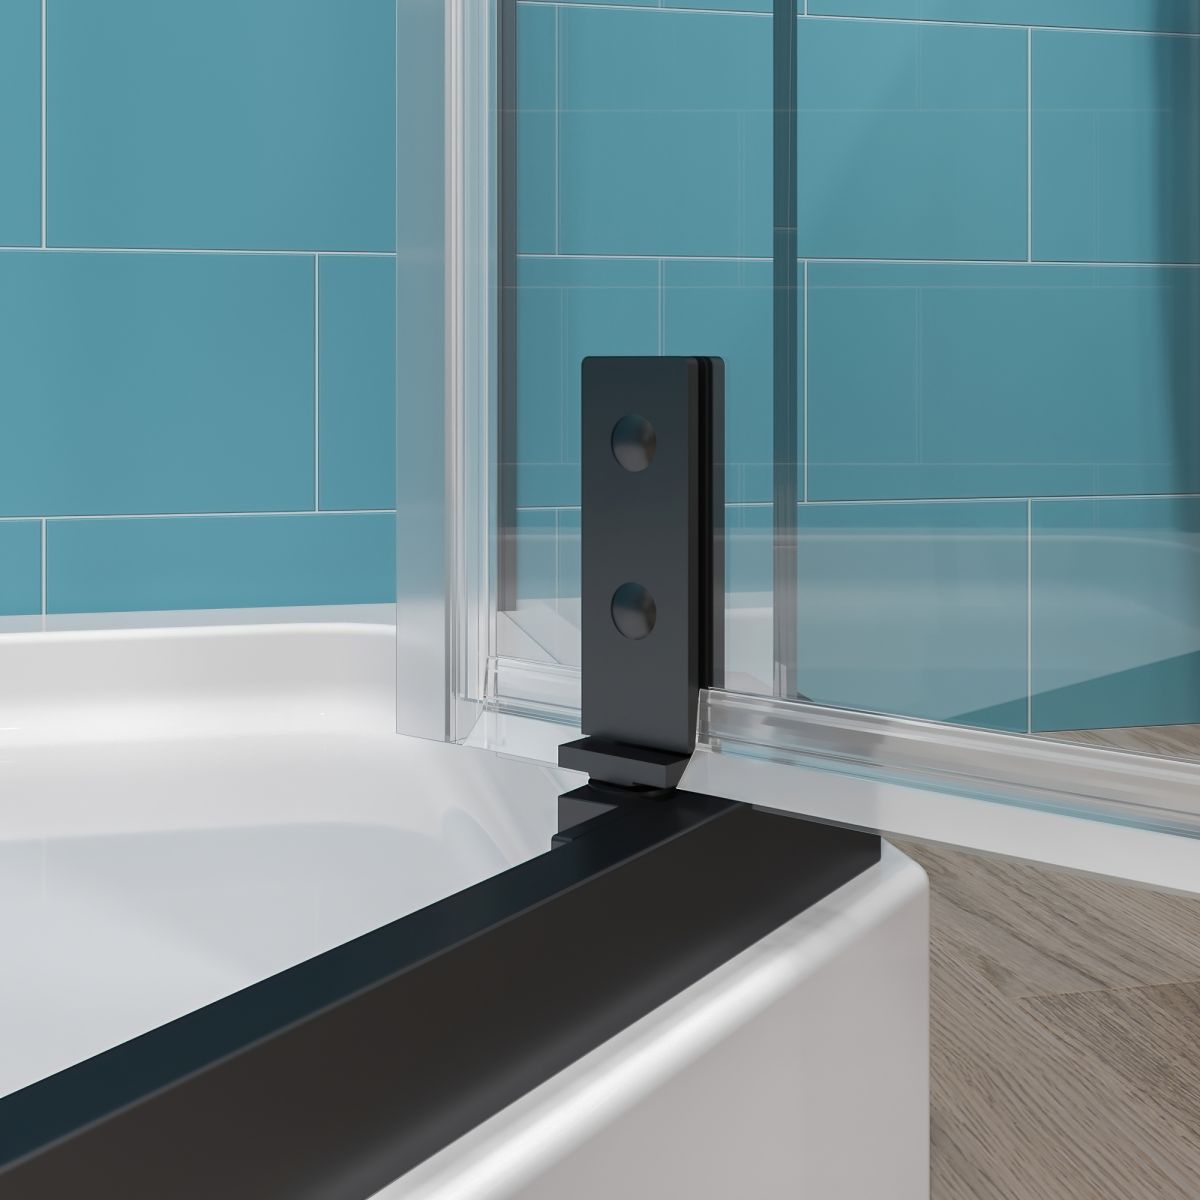 Prism Neo-Angle Frameless Shower Door 38 in. W x 72 in. H,Corner Shower Enclosure,6mm Clear Glass,Pivot Shower Doors,Matte Black,Not Base